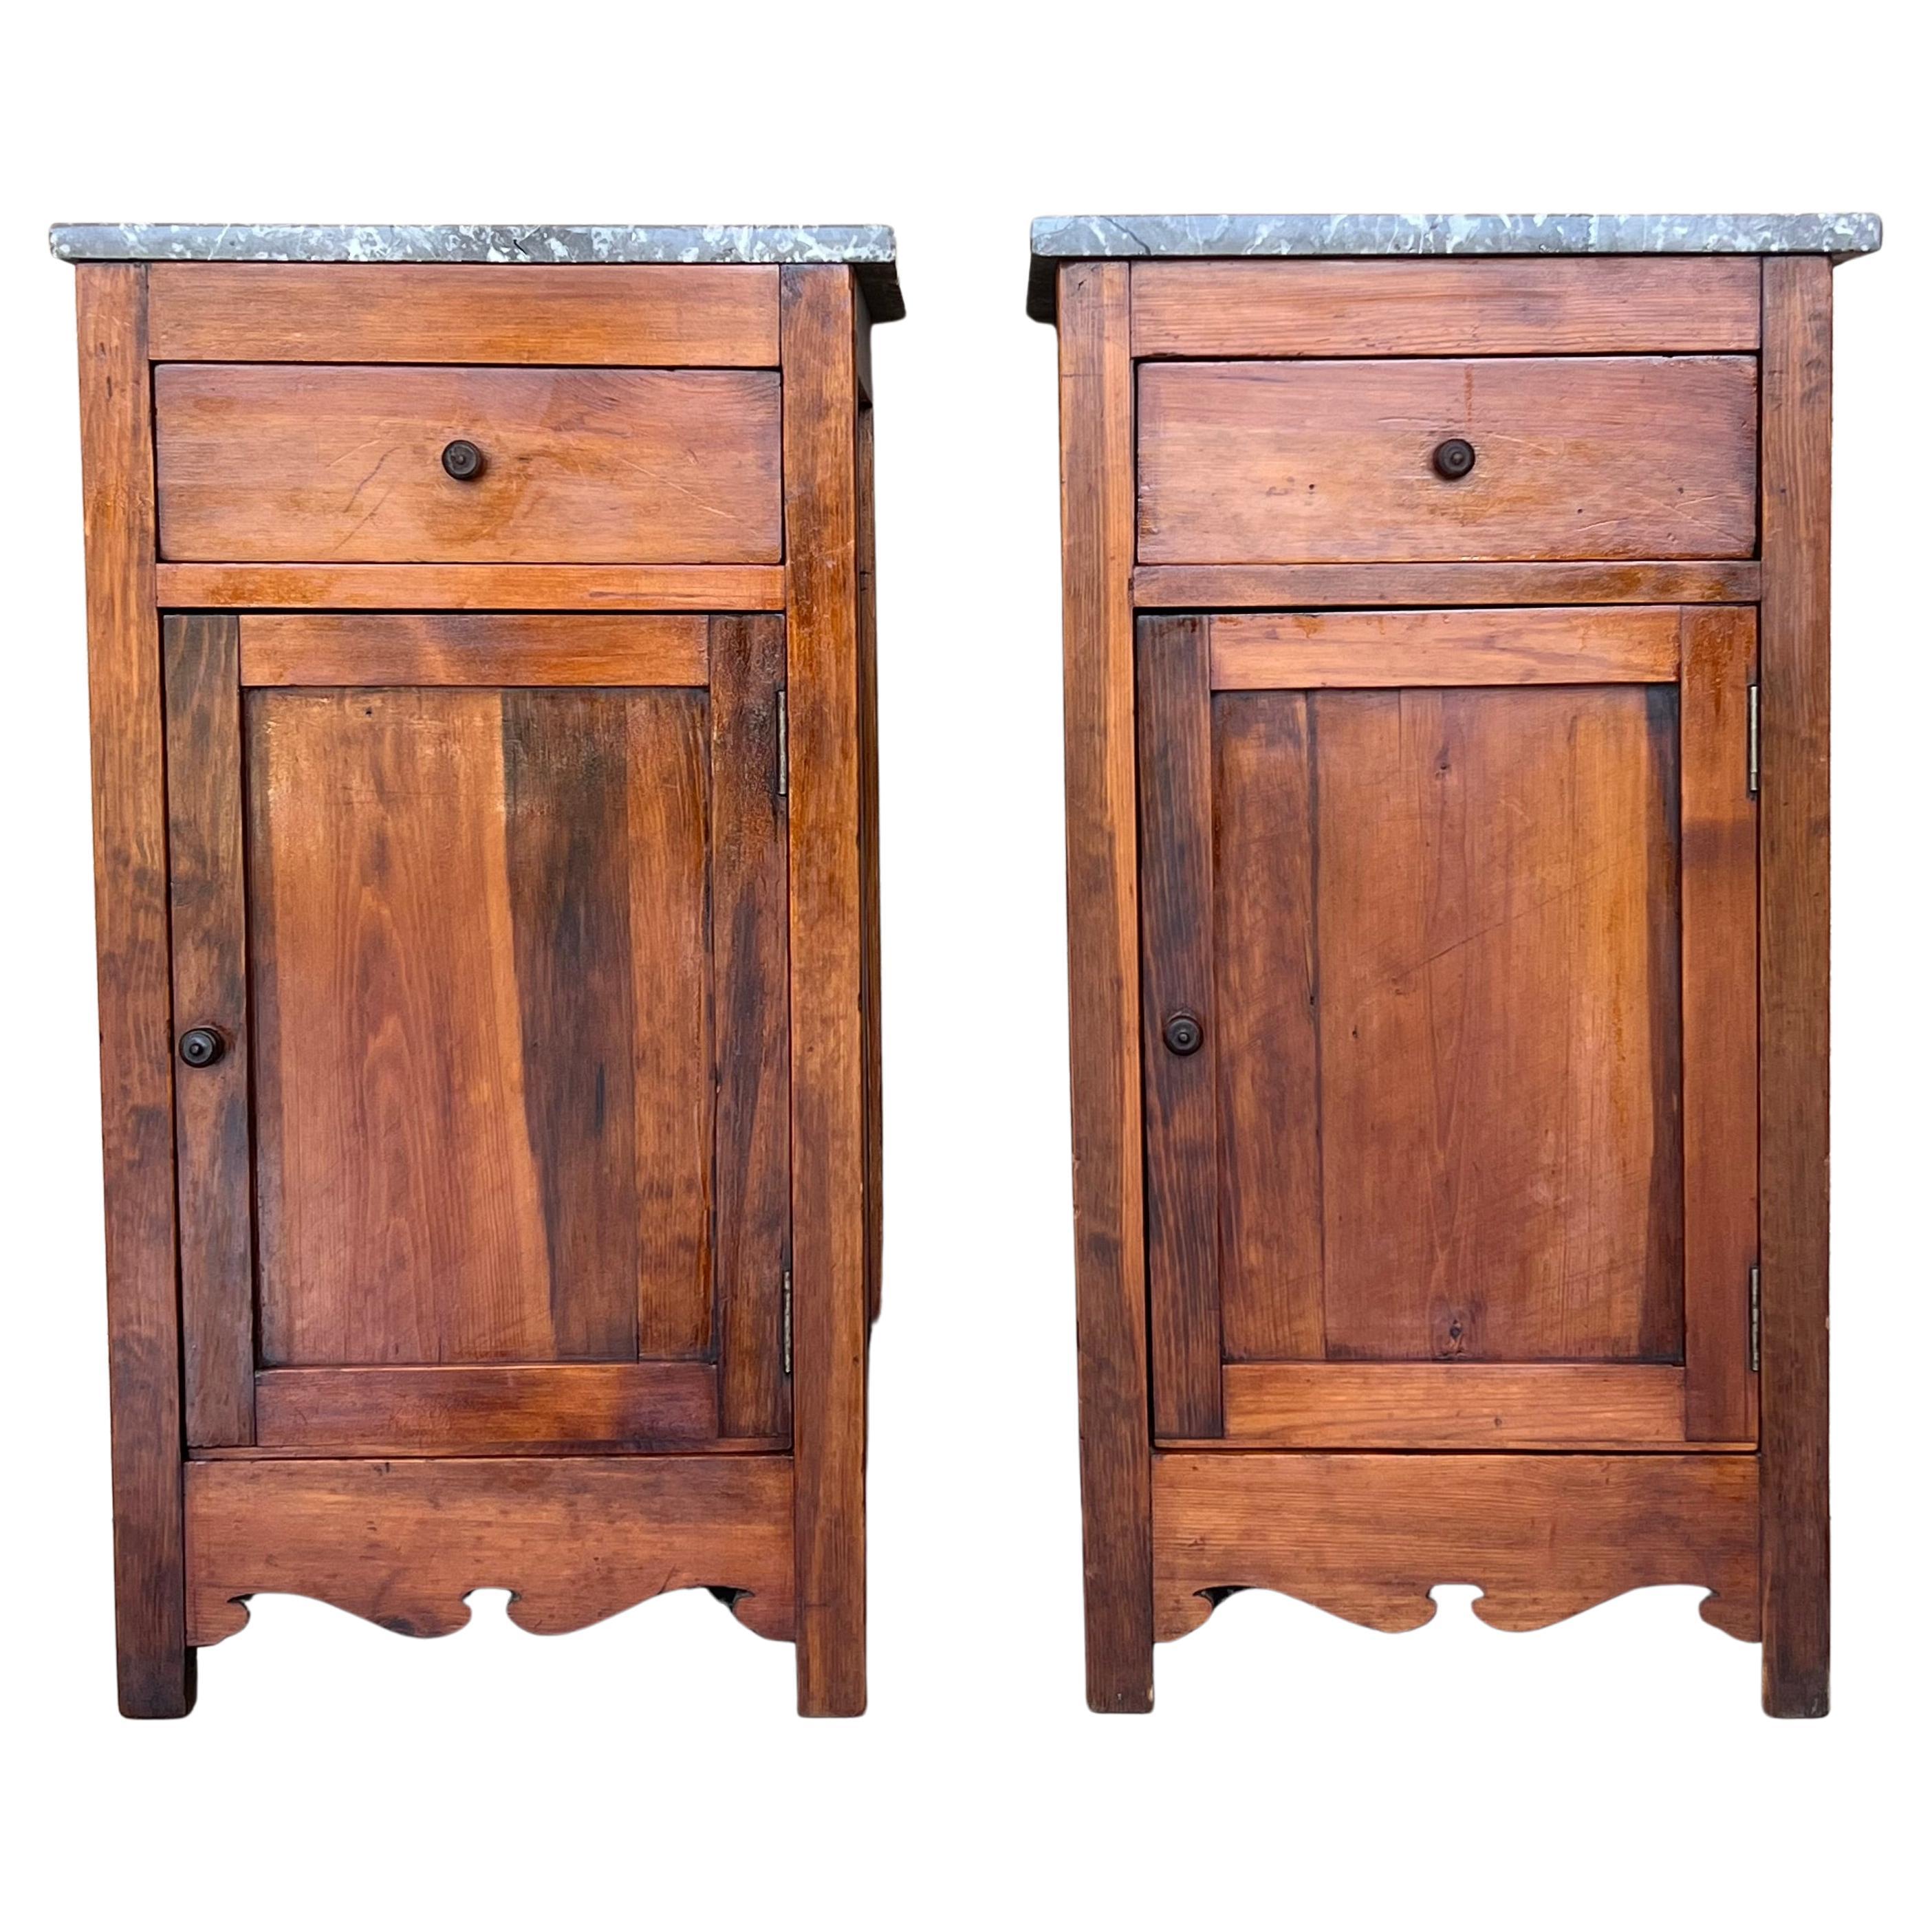 20th Century Pair of Biedermeier Nightstands with Marble Top, One-Drawer & Door For Sale